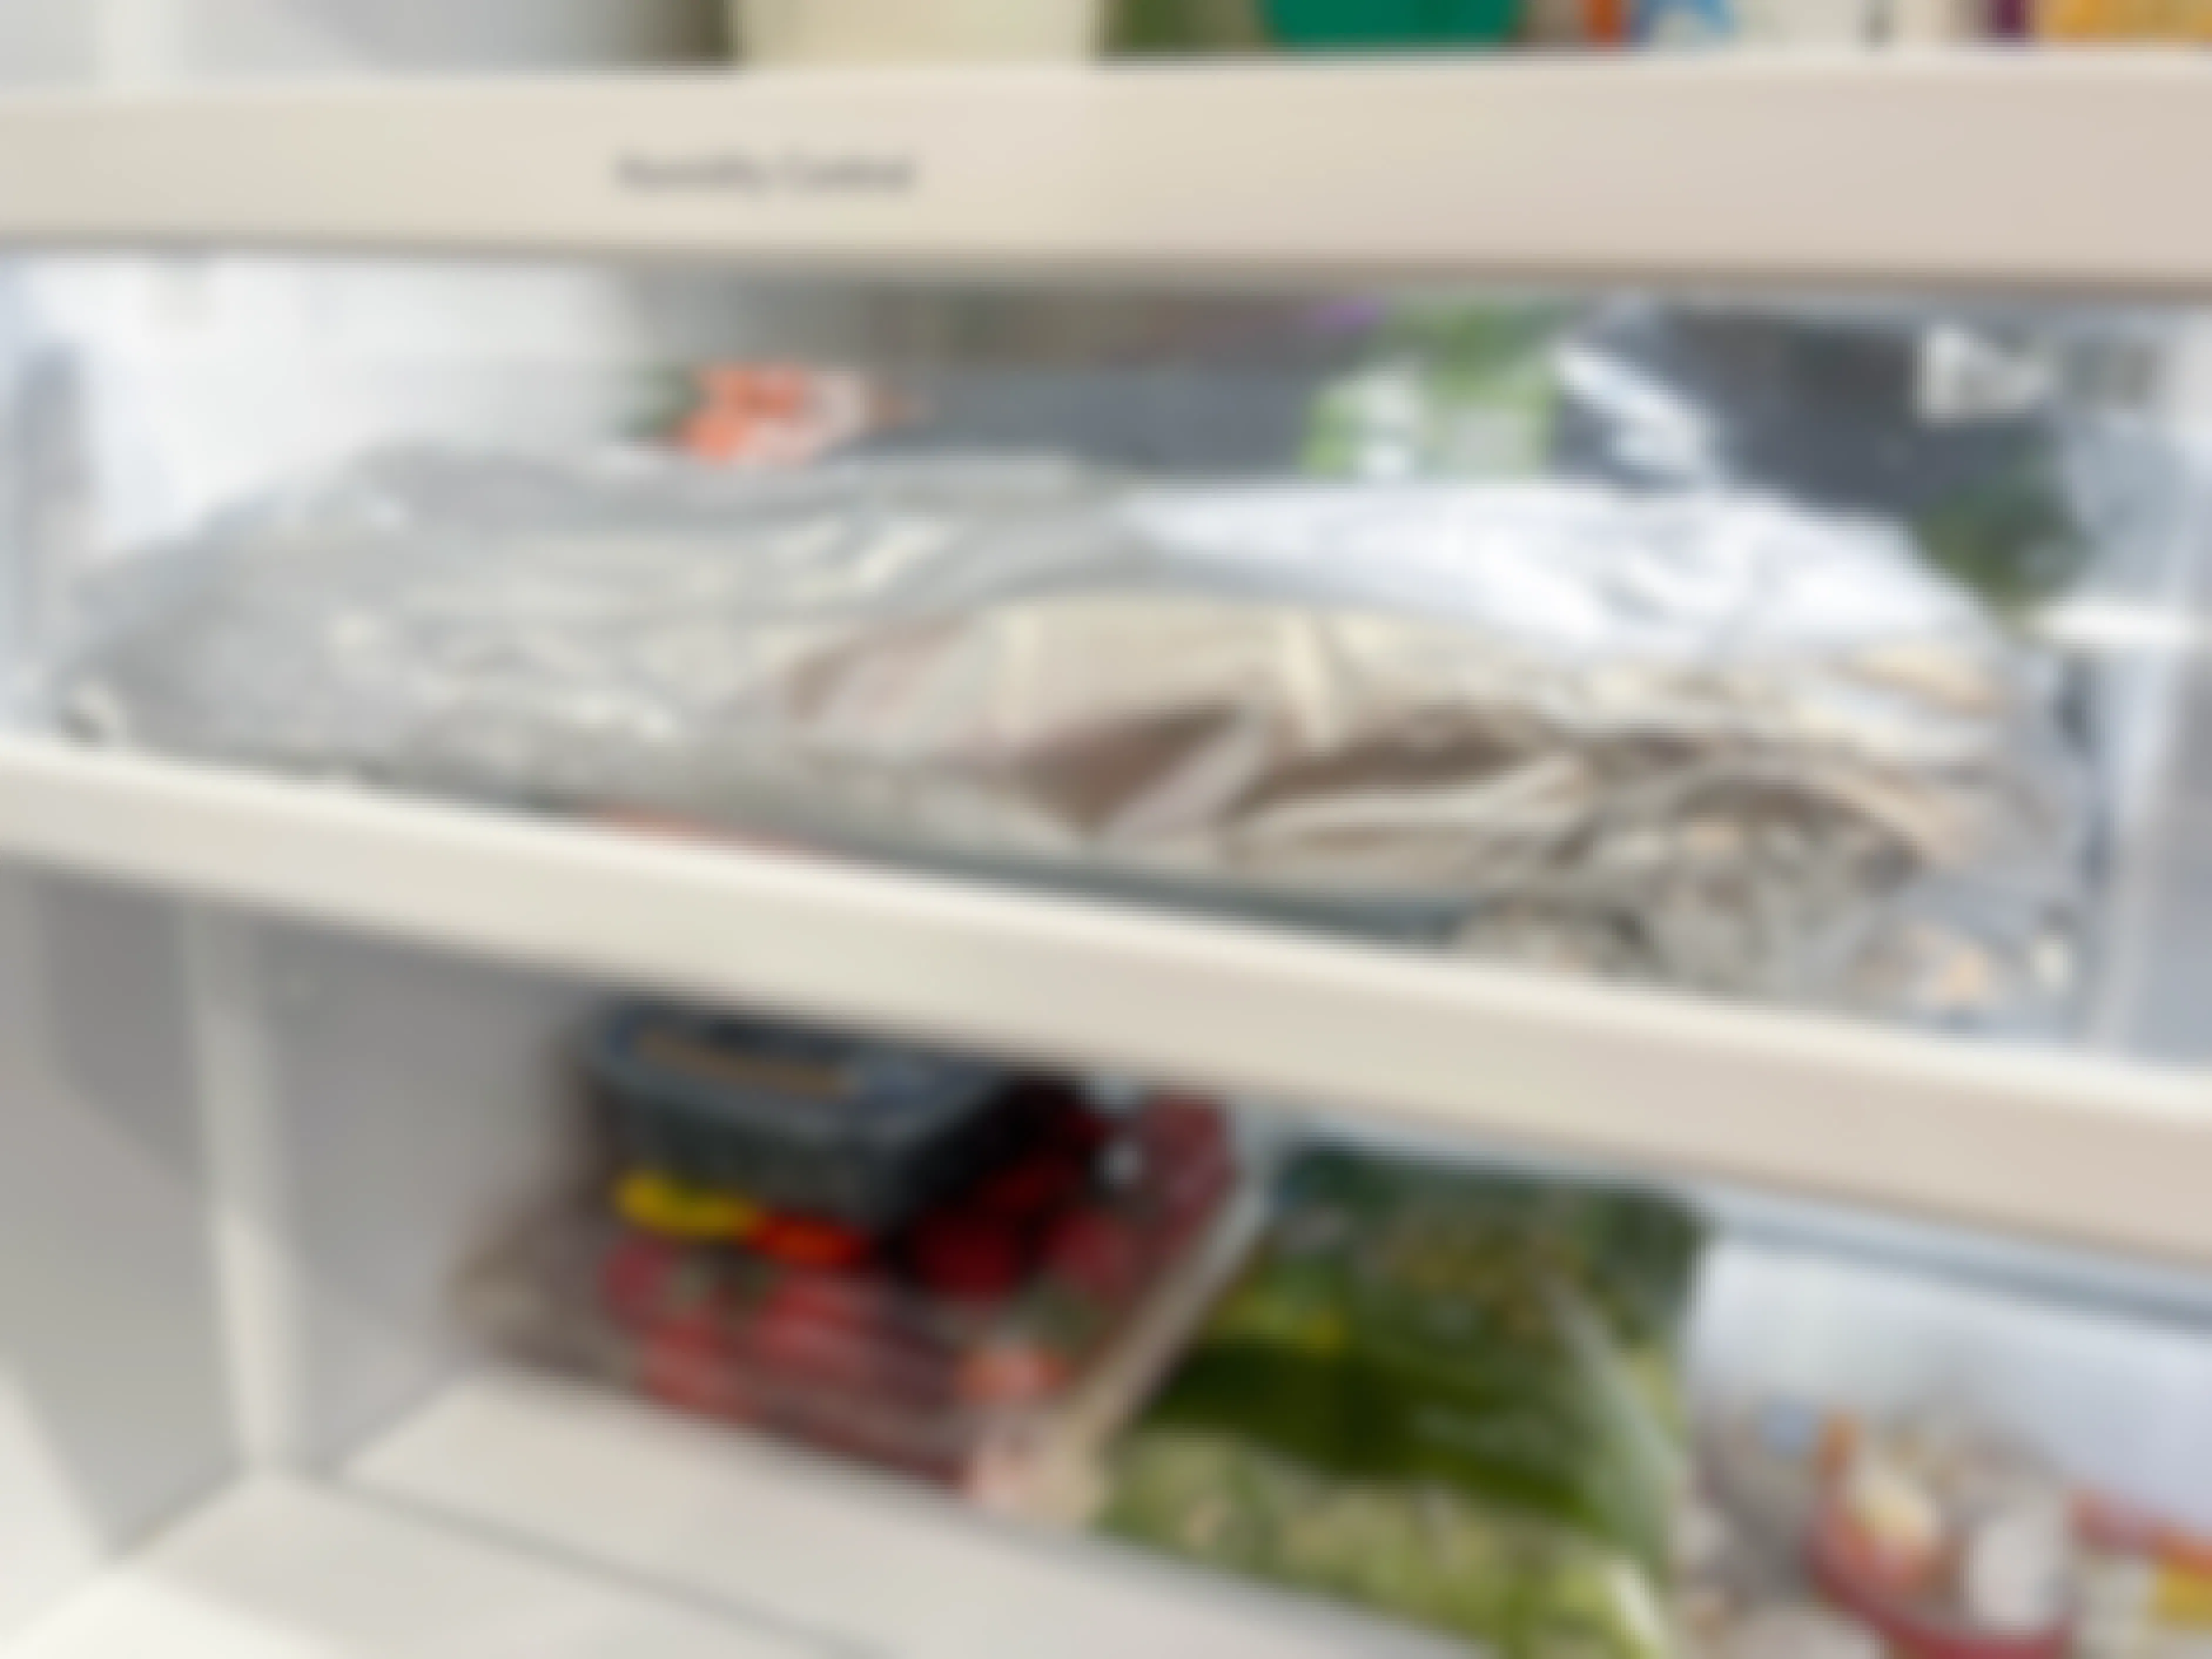 celery wrapped in foil in fridge crisper drawer